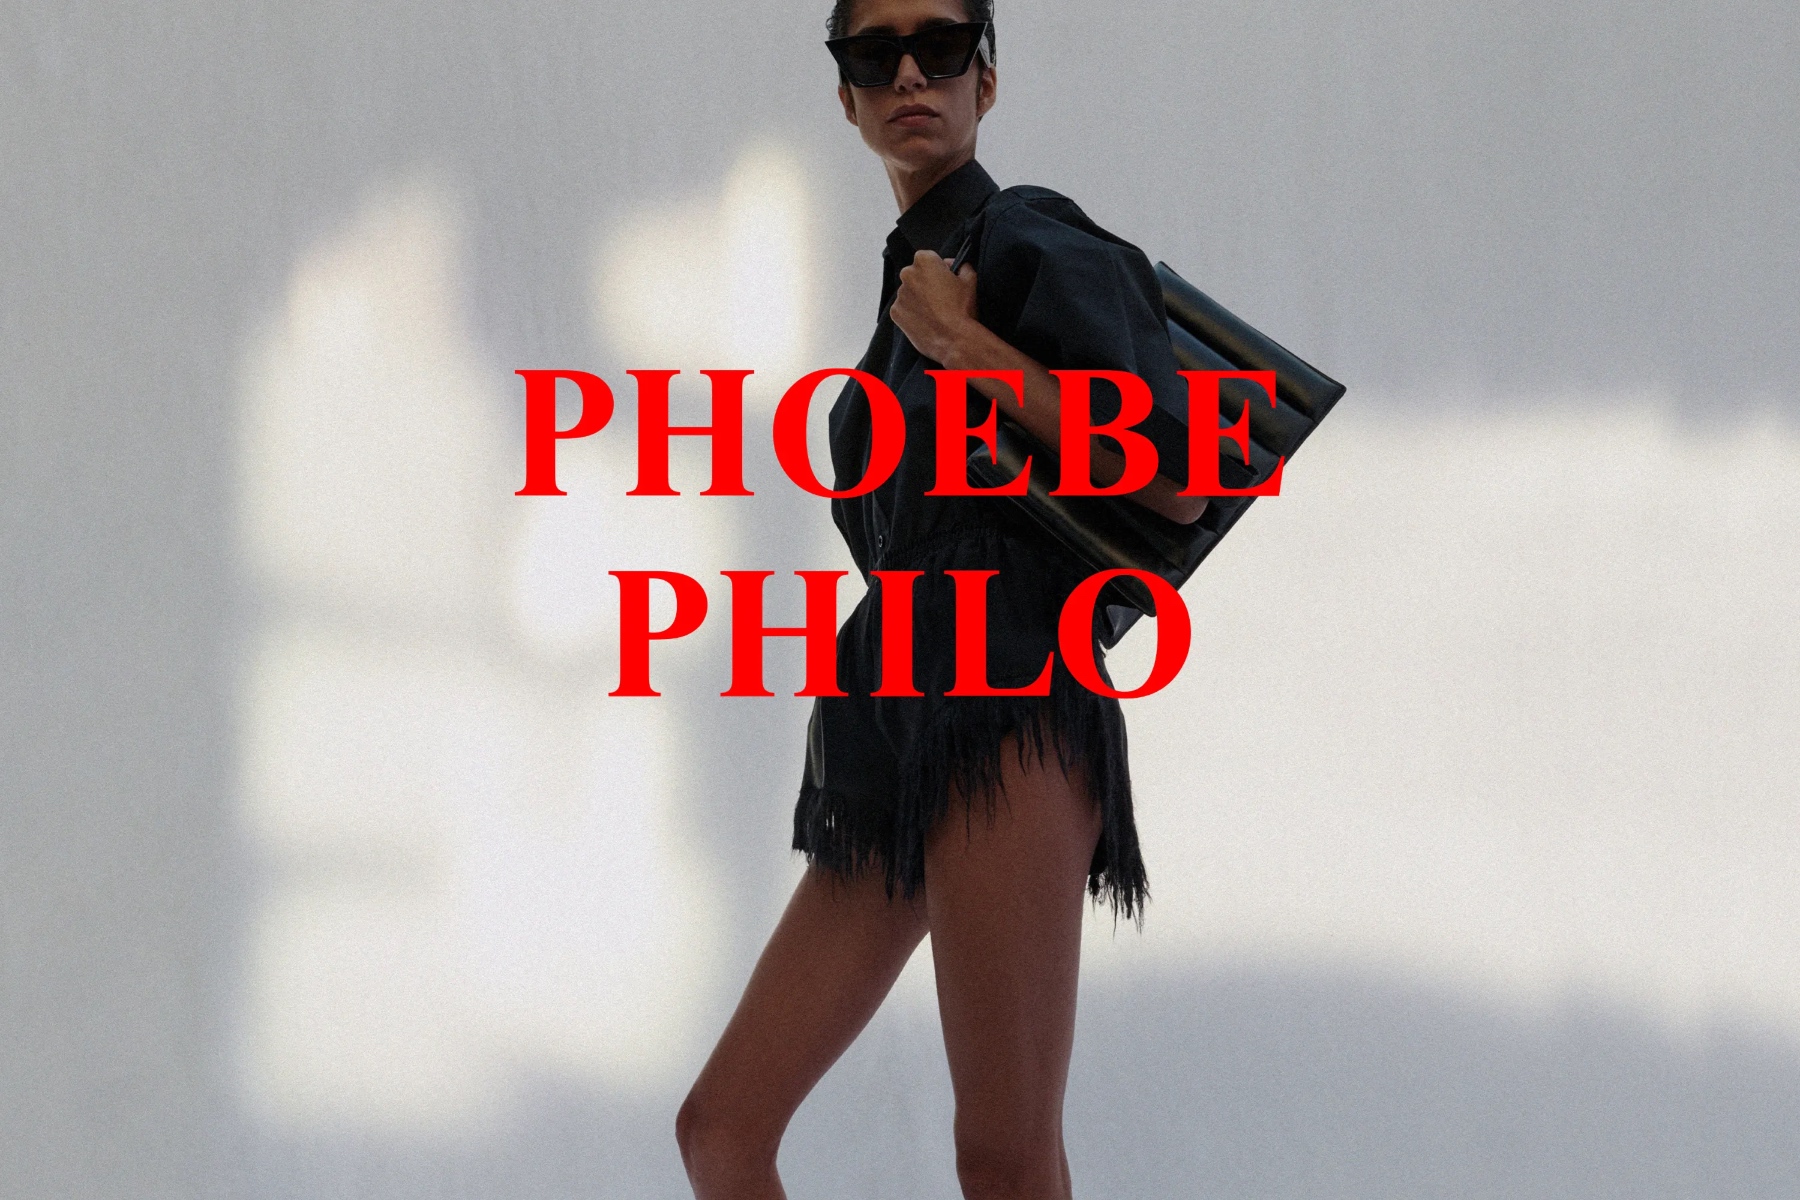 UK designer Phoebe Philo returns with long-awaited first